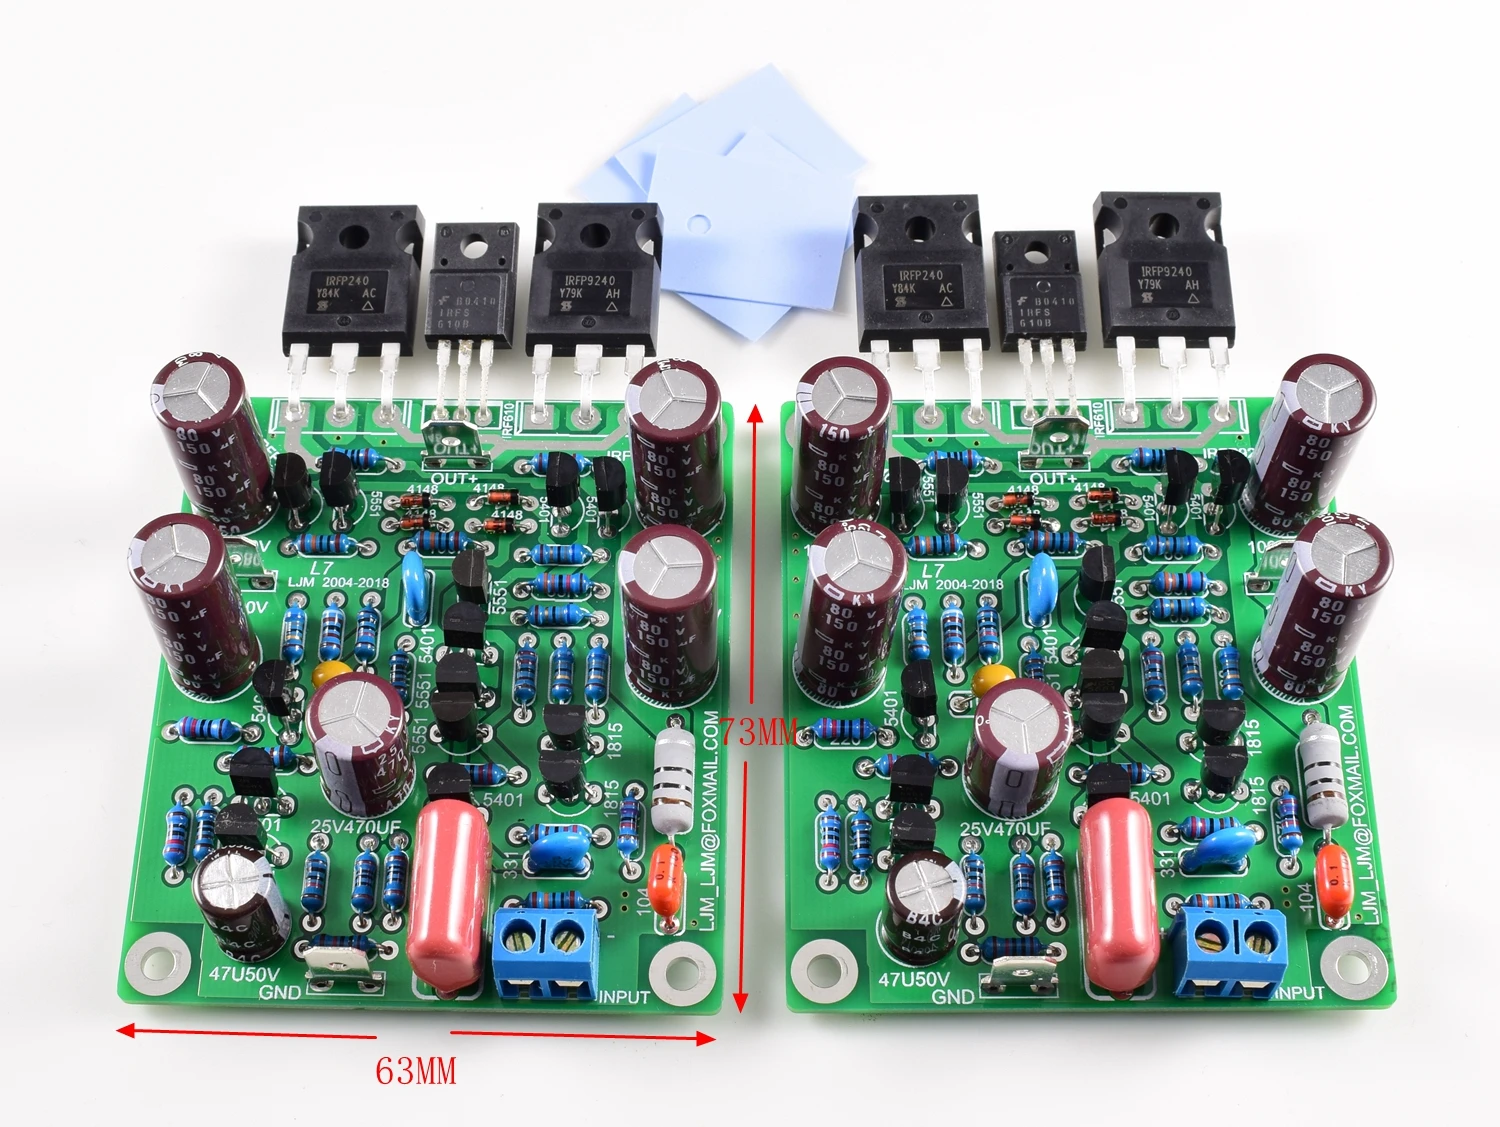 

2pcs new Class AB MOSFET IRFP240 IRFP9240 L7 Audio HIFI Power Amplifier DUAL-CHANNEL 300W to 350WX2 Amplifier Board